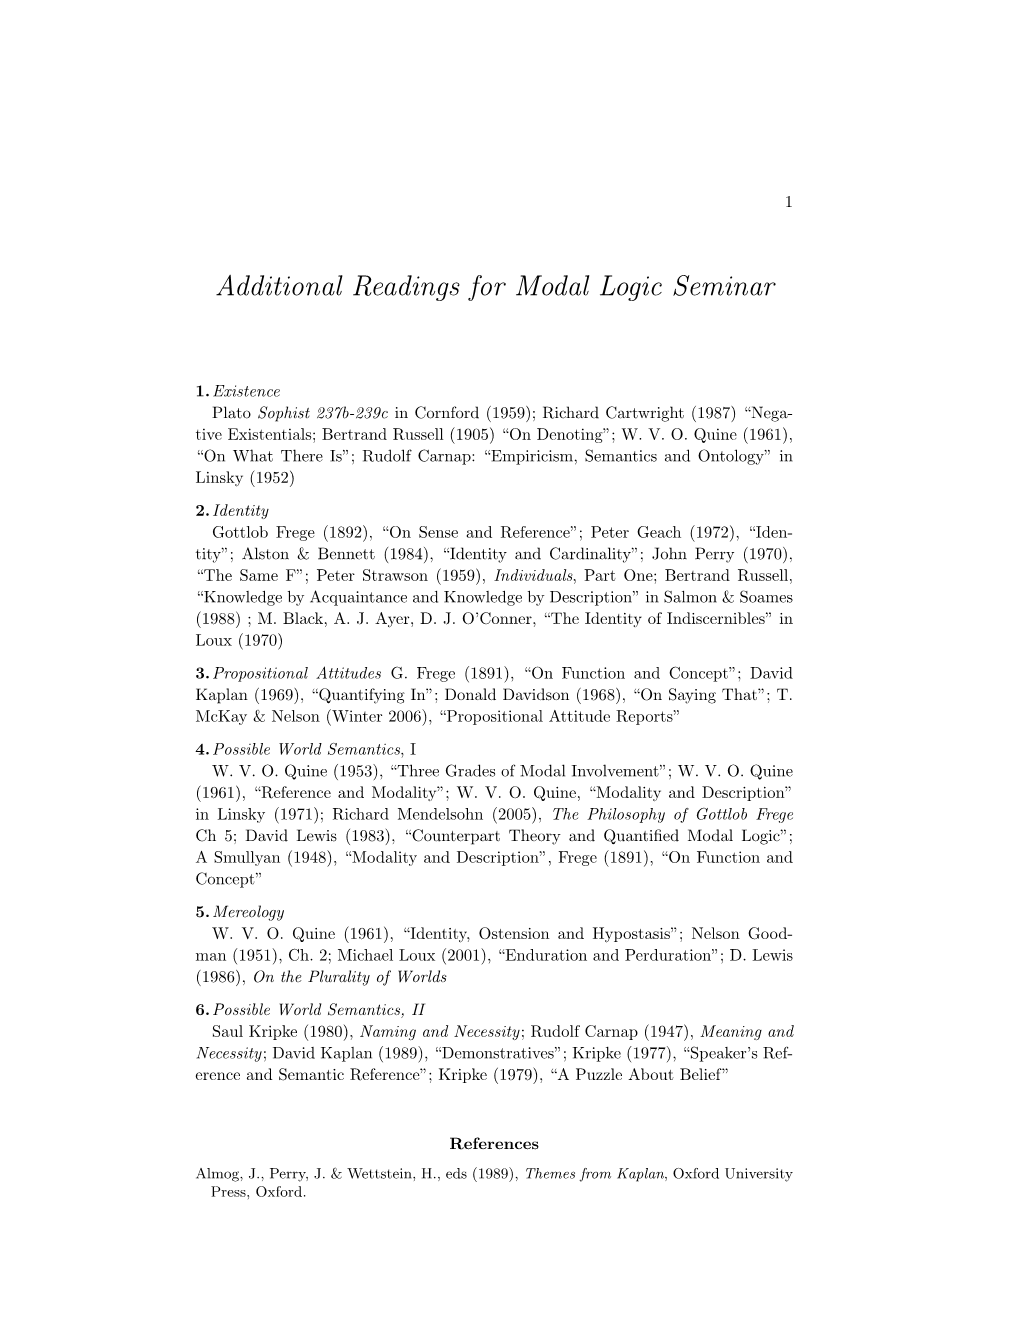 Additional Readings for Modal Logic Seminar